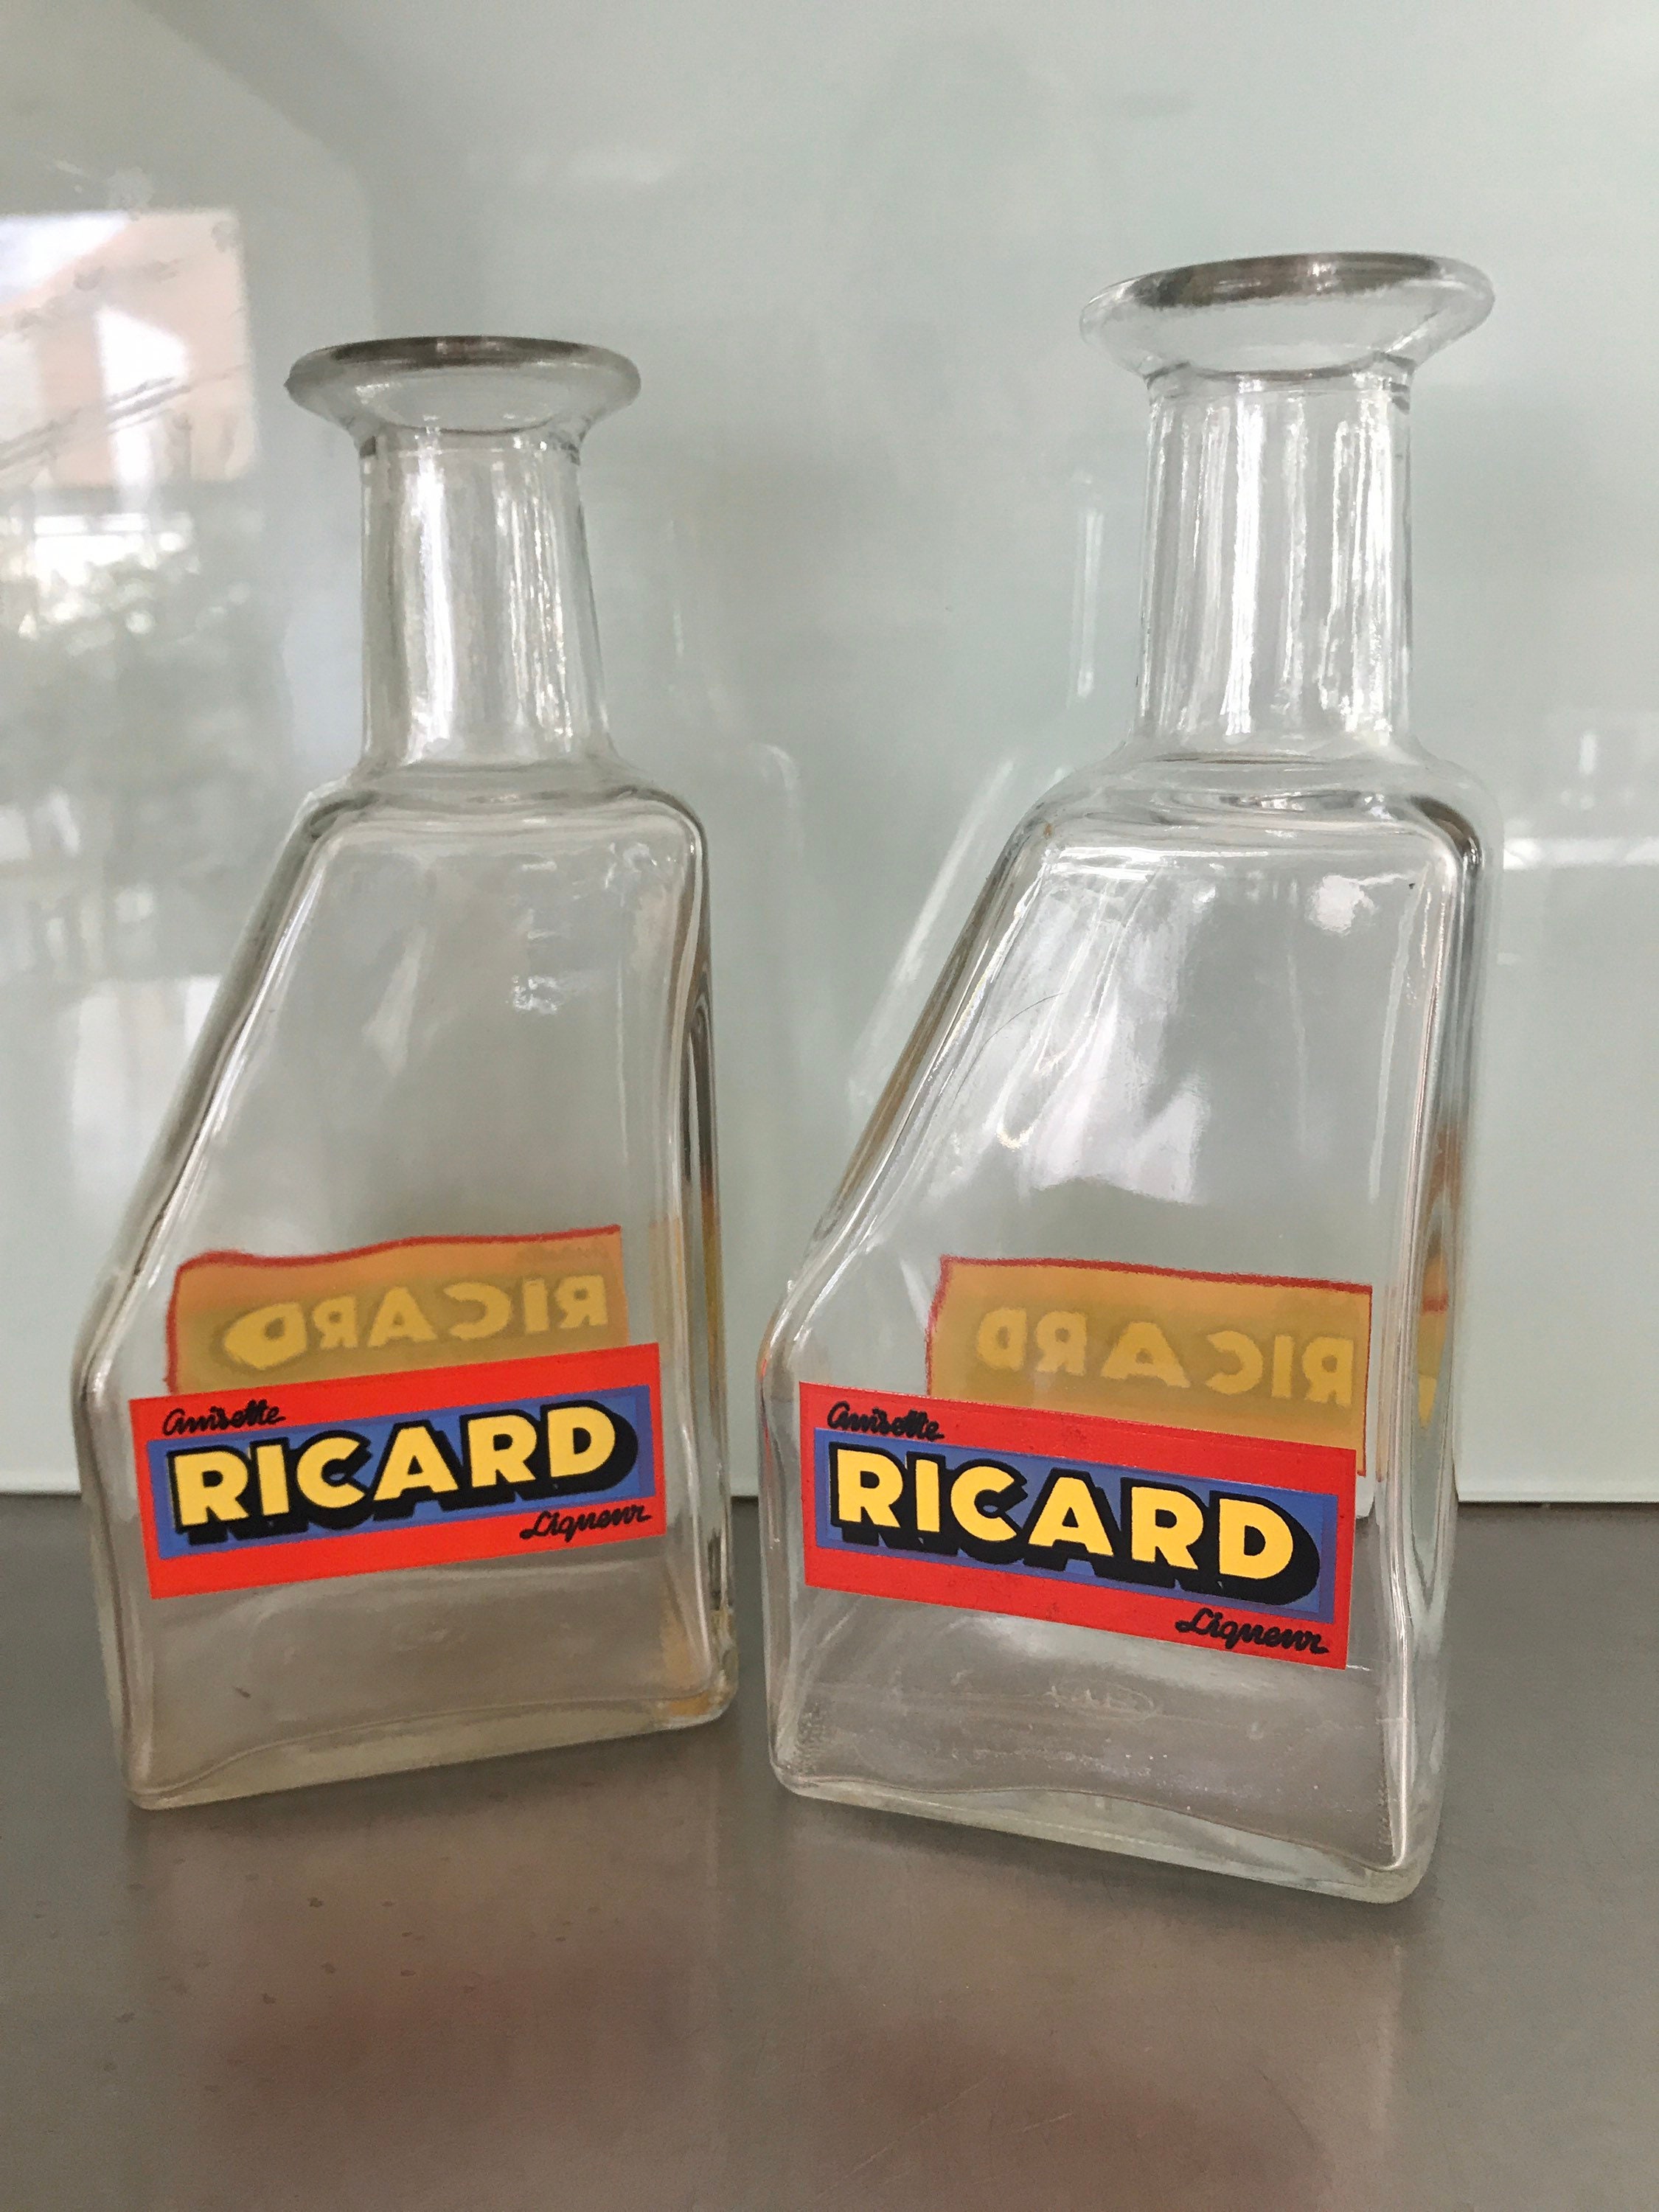 Coffret cadeau Ricard Lehanneur 2 verres carafe - En stock